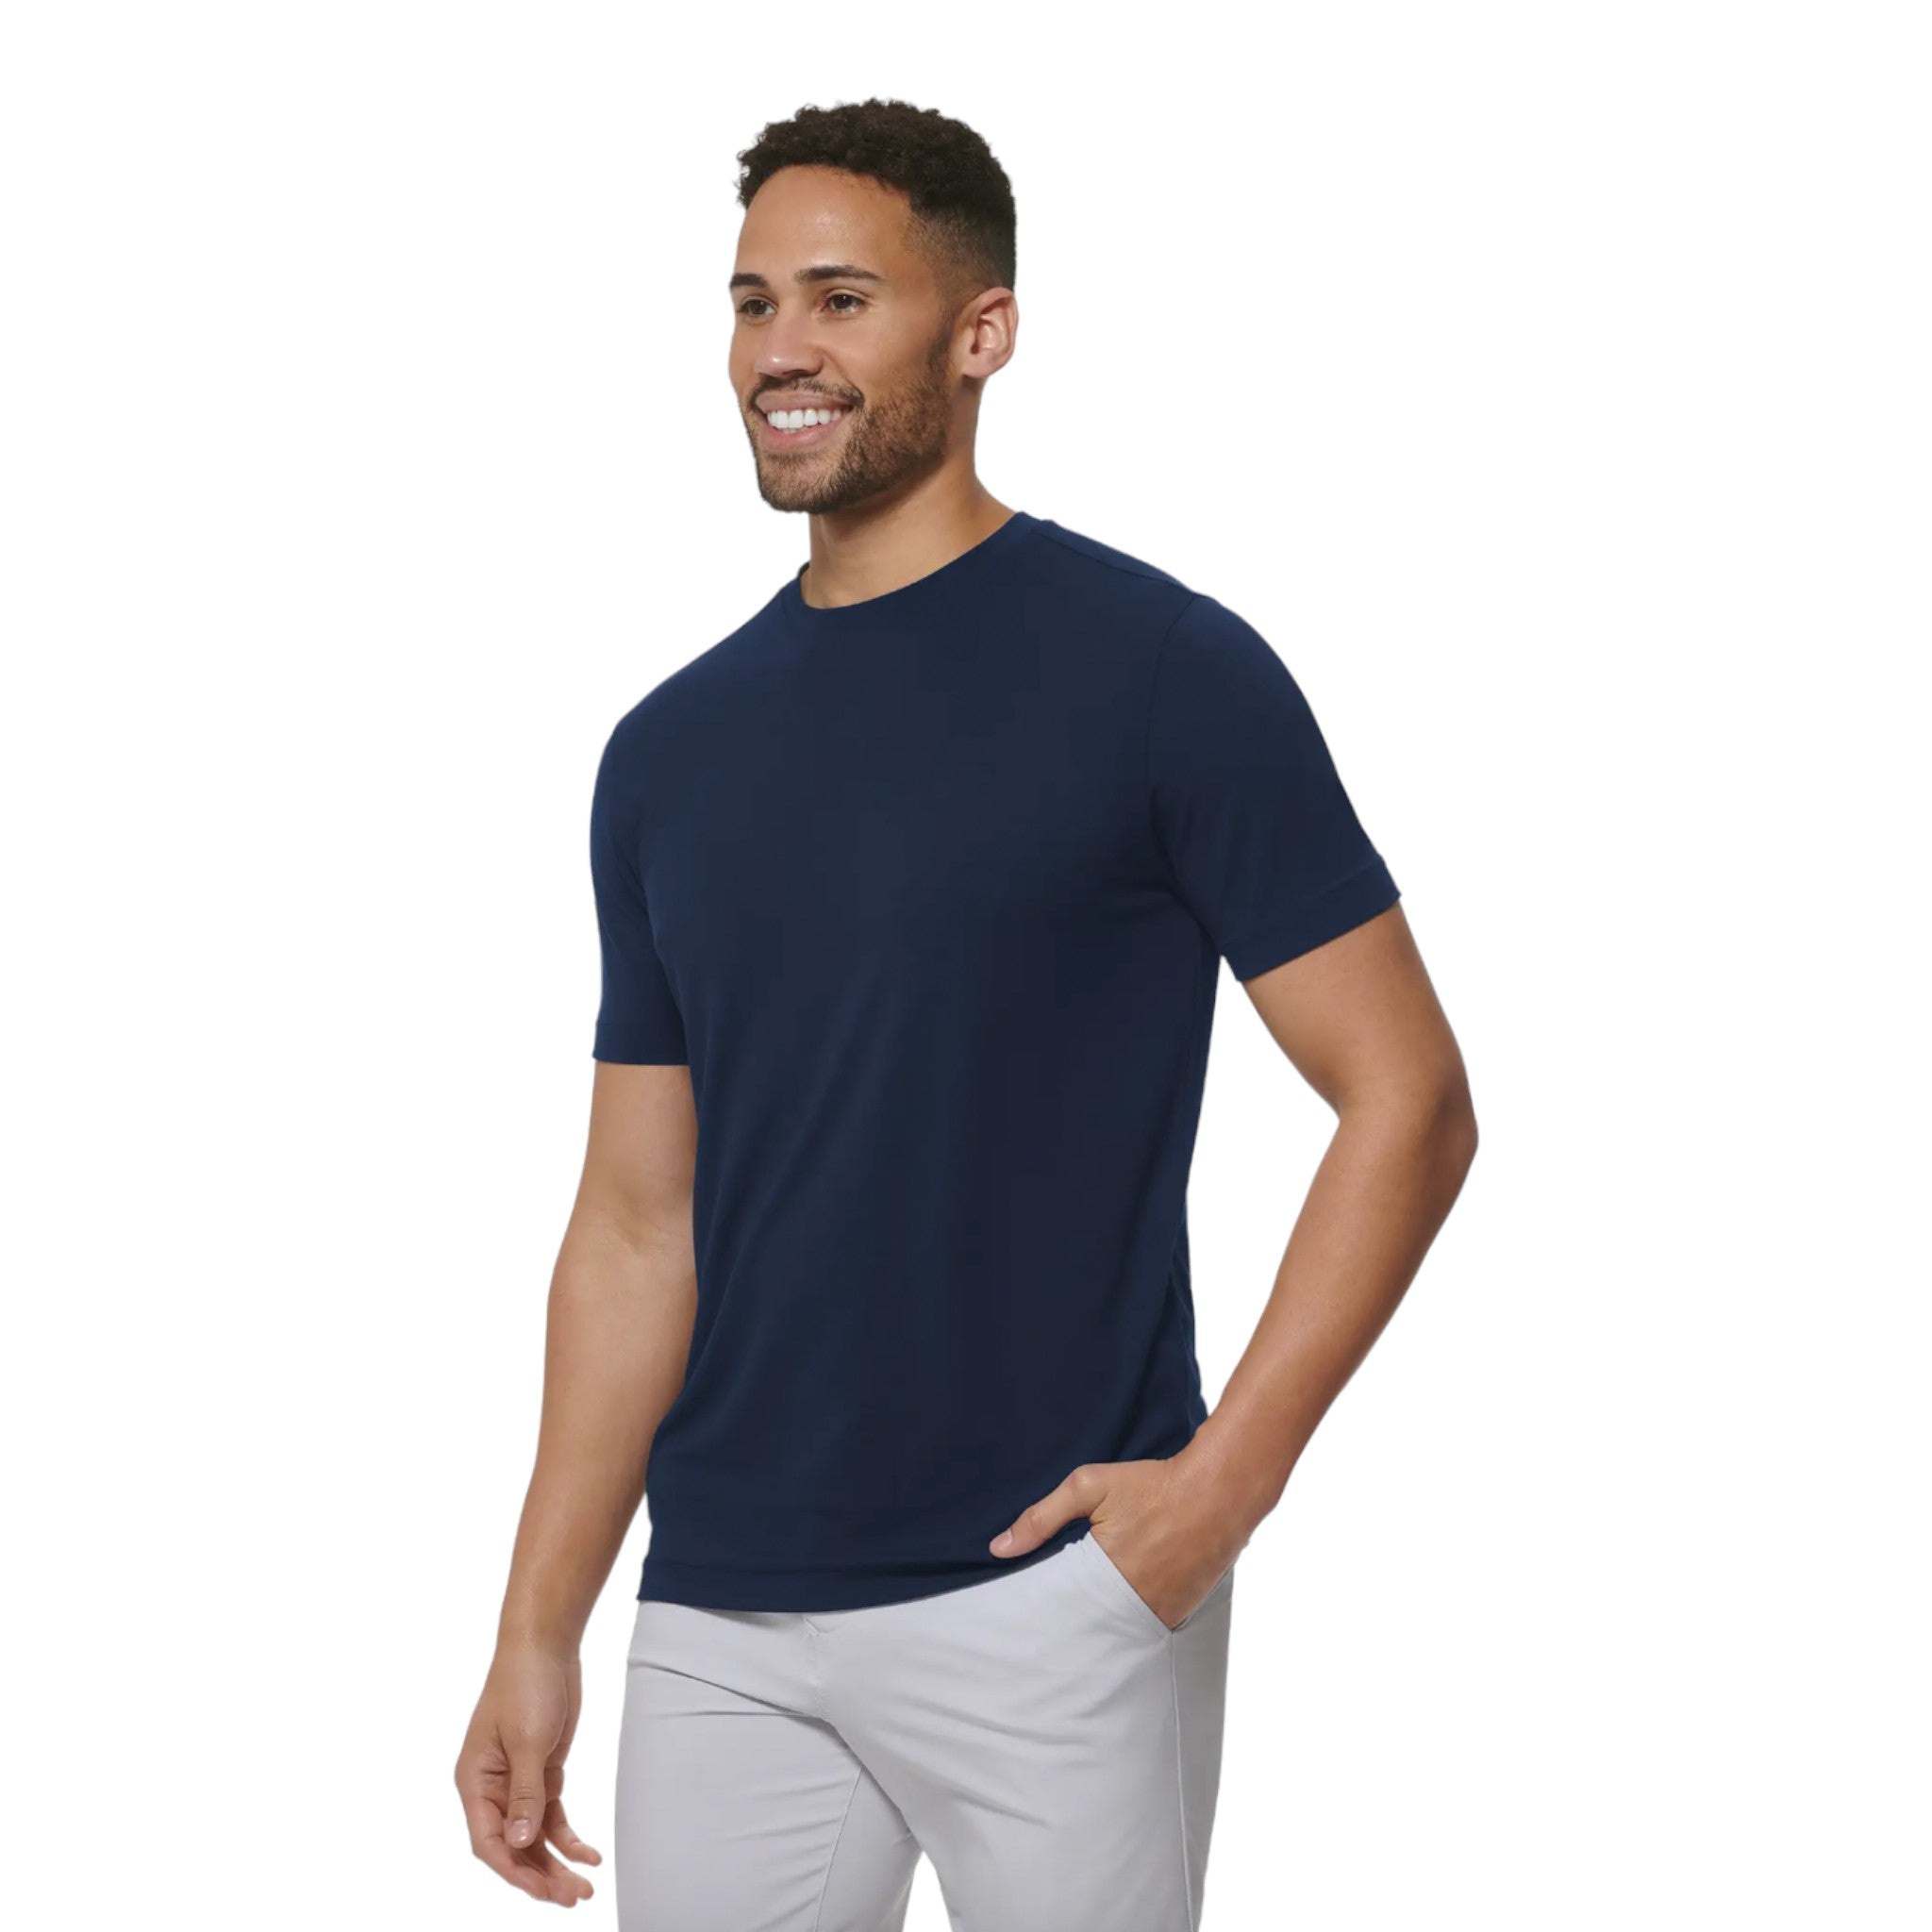 Mizzen & Main - Knox Short Sleeve T-Shirt - Navy Solid